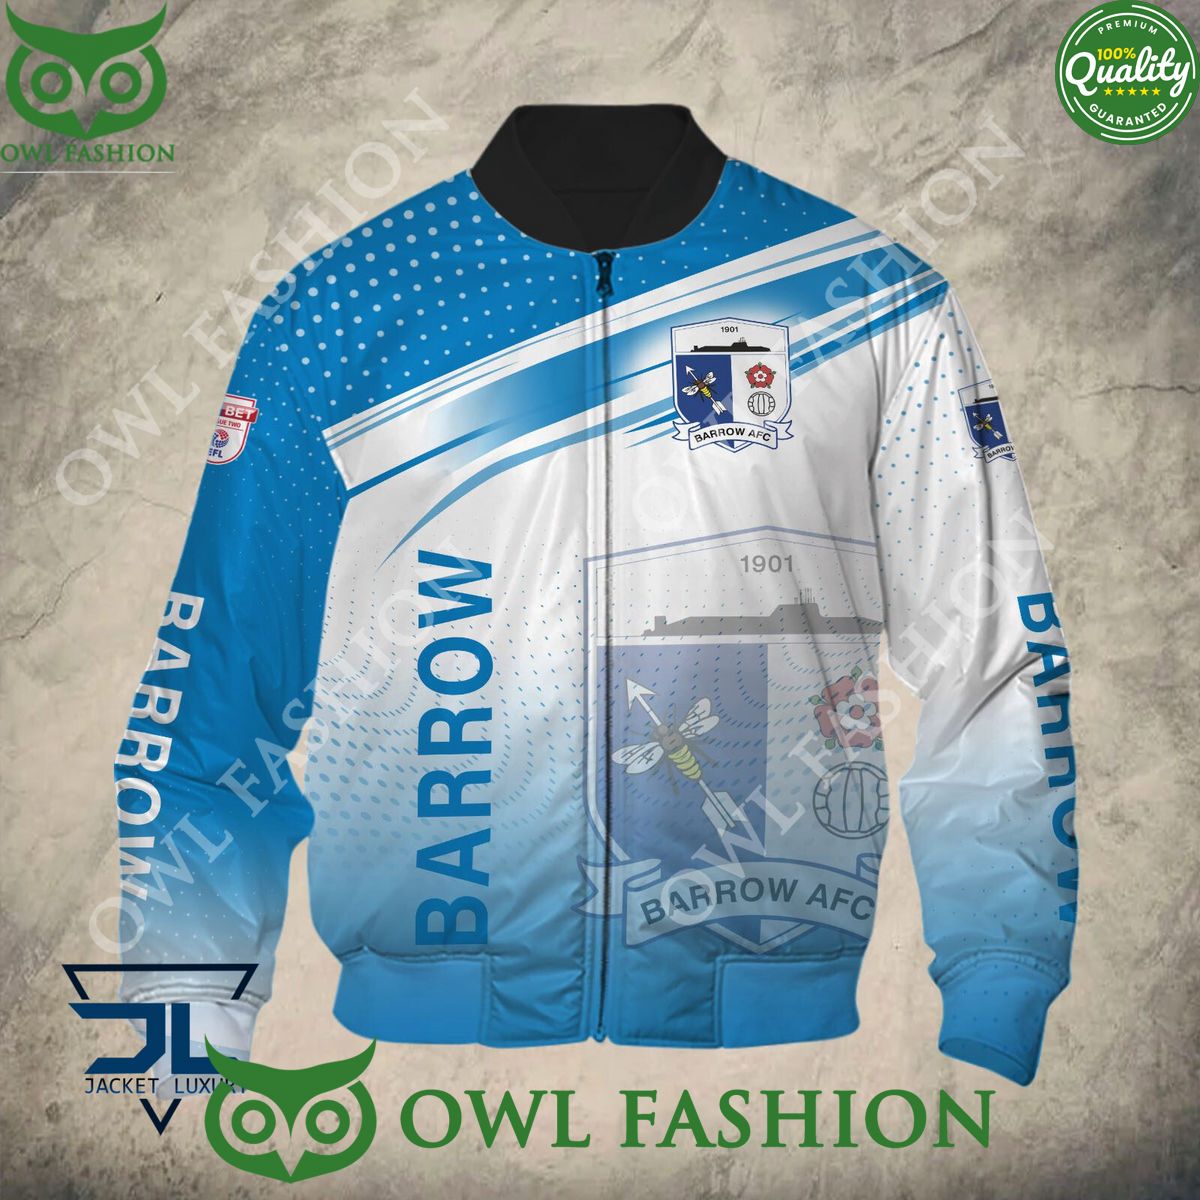 barrow afc trending design league two hoodie shirt 6 8w2ri.jpg